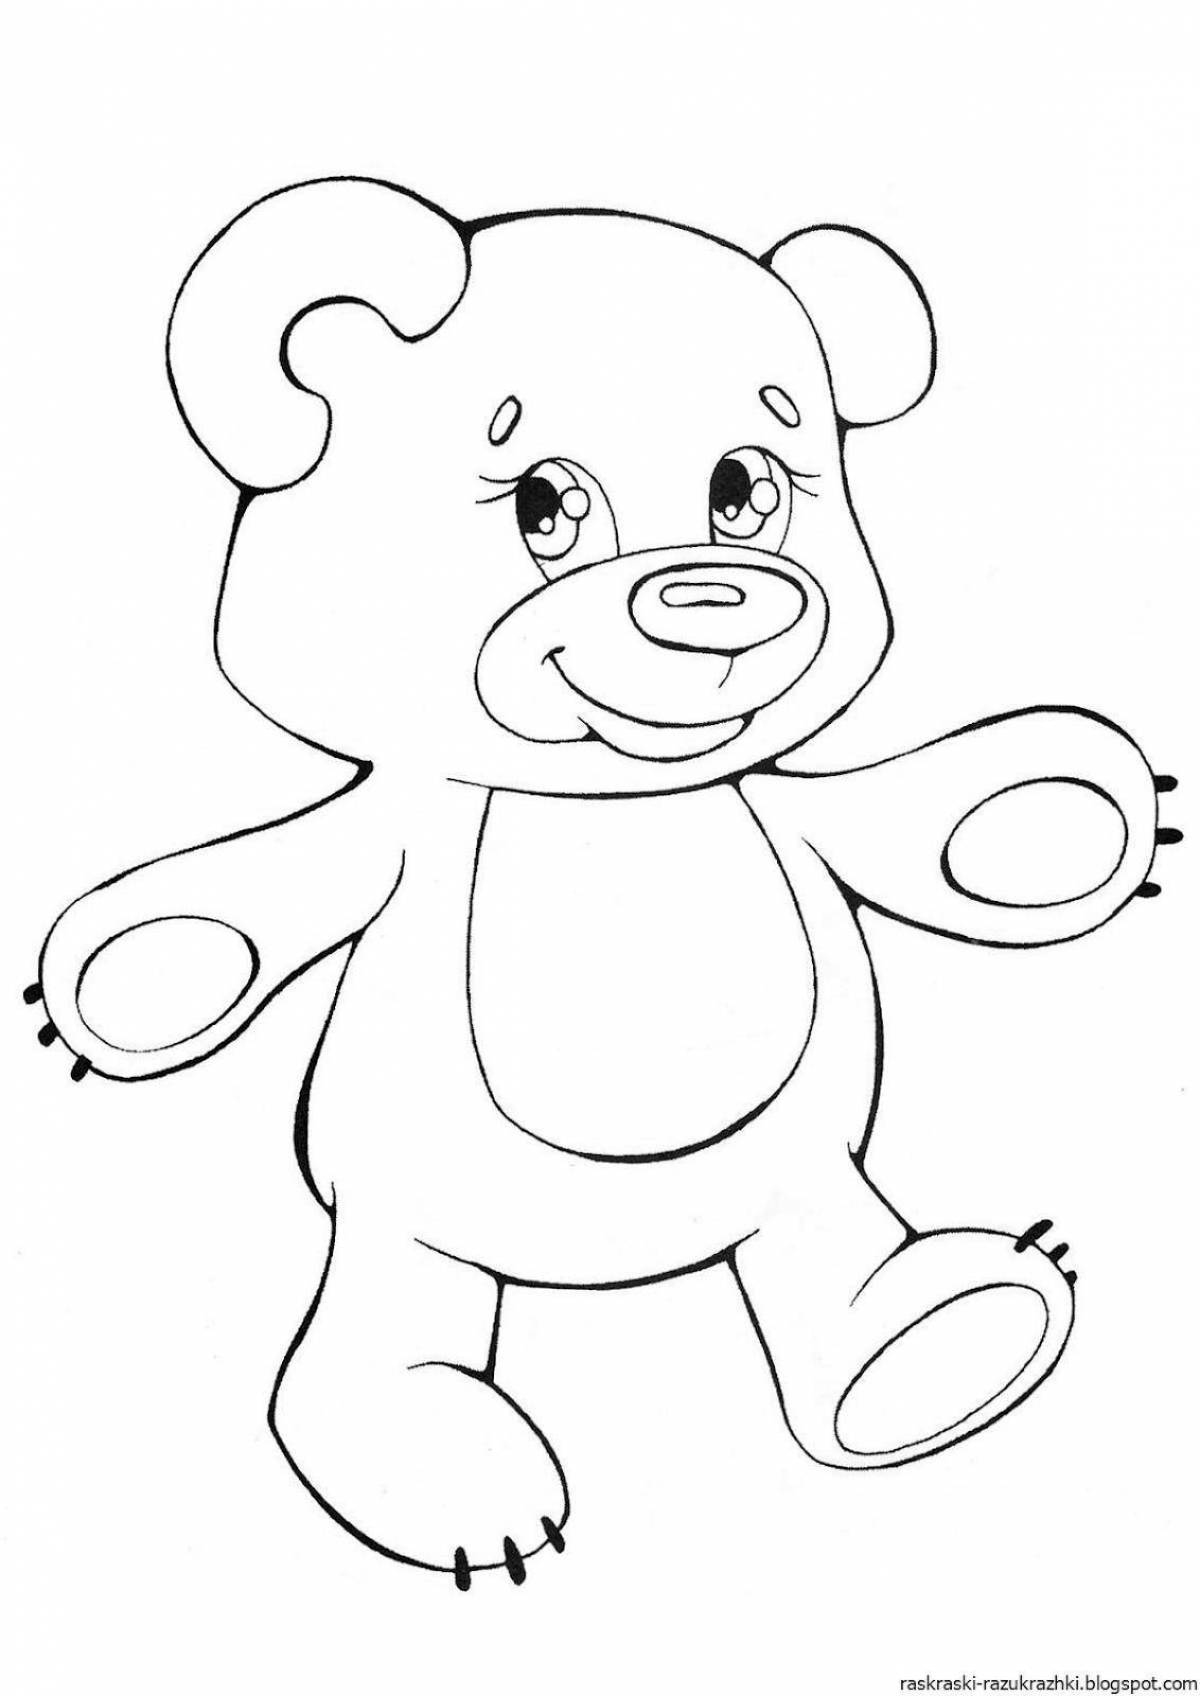 Children's teddy bear coloring book